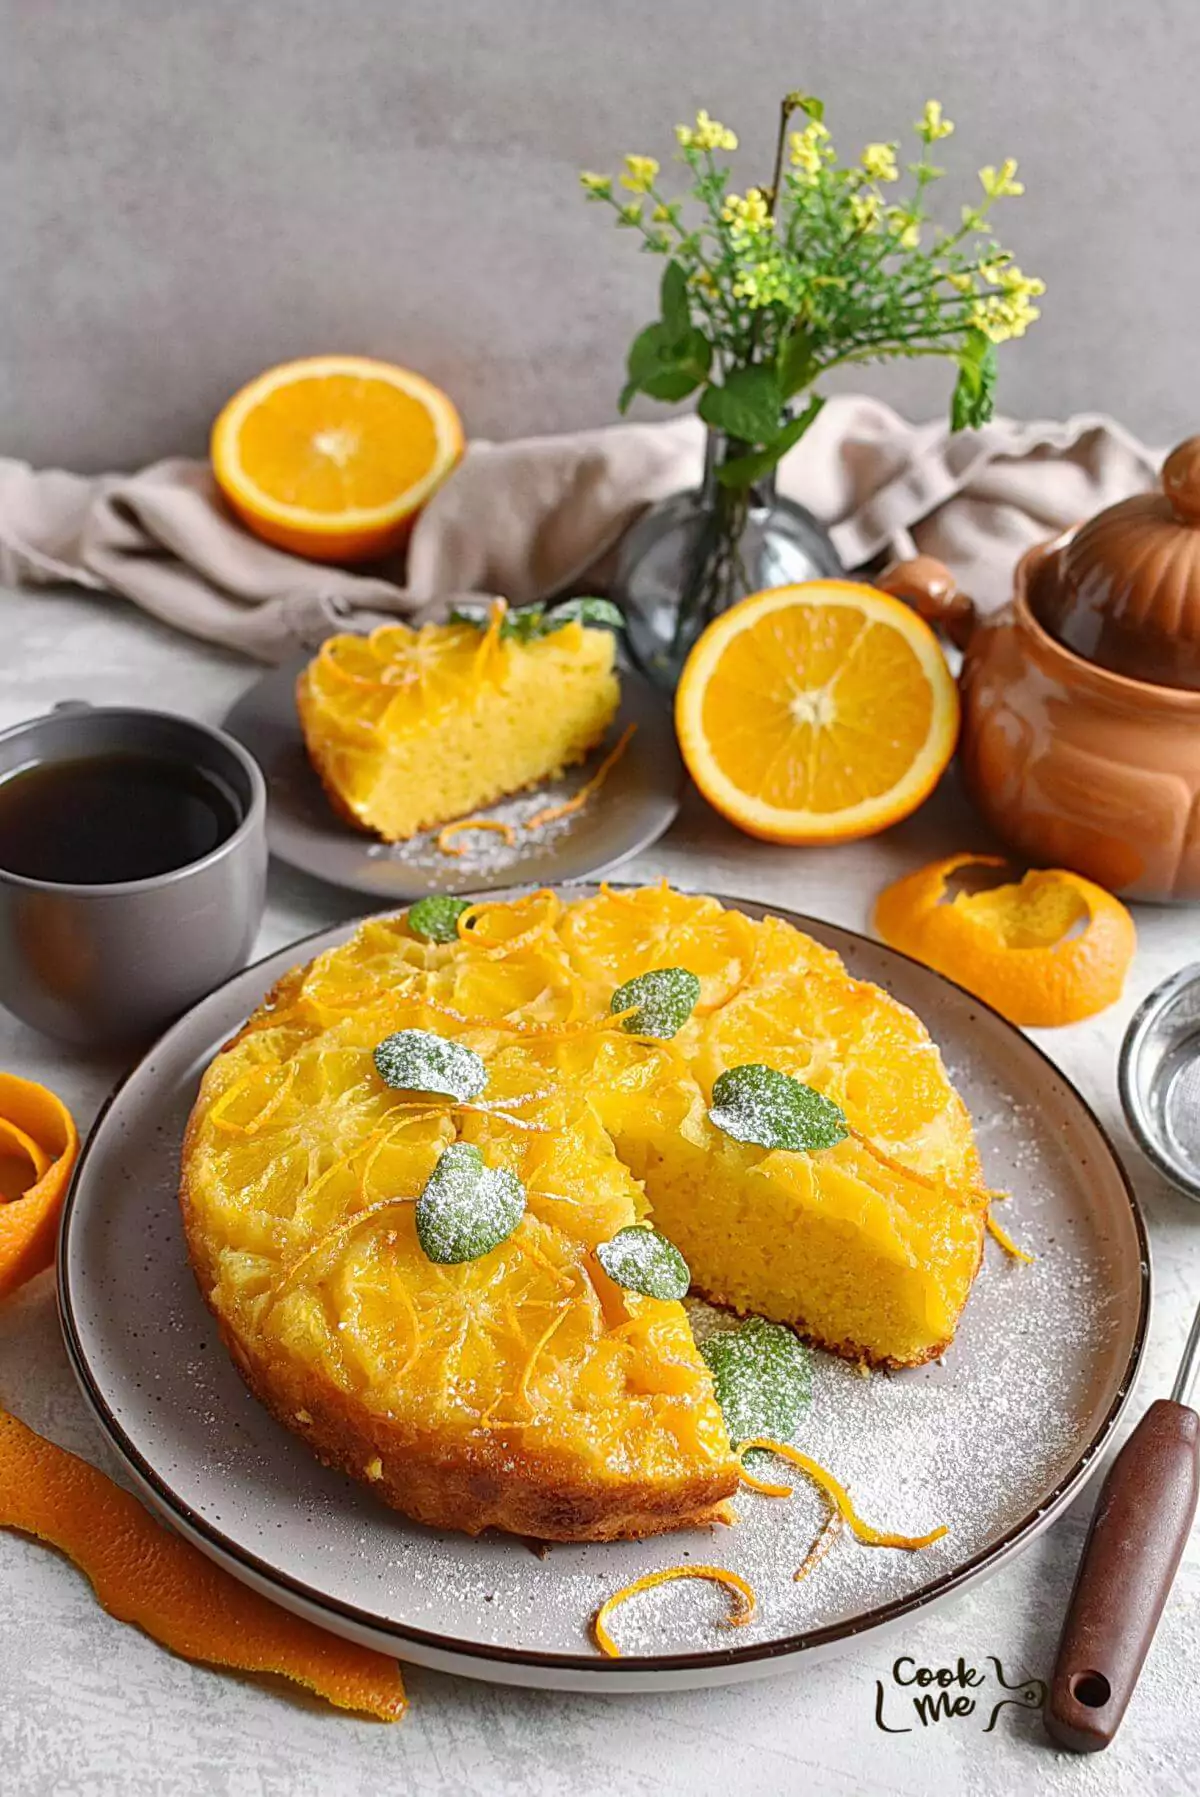 Cinnamon drizzle cake with candied orange - Recipes - delicious.com.au